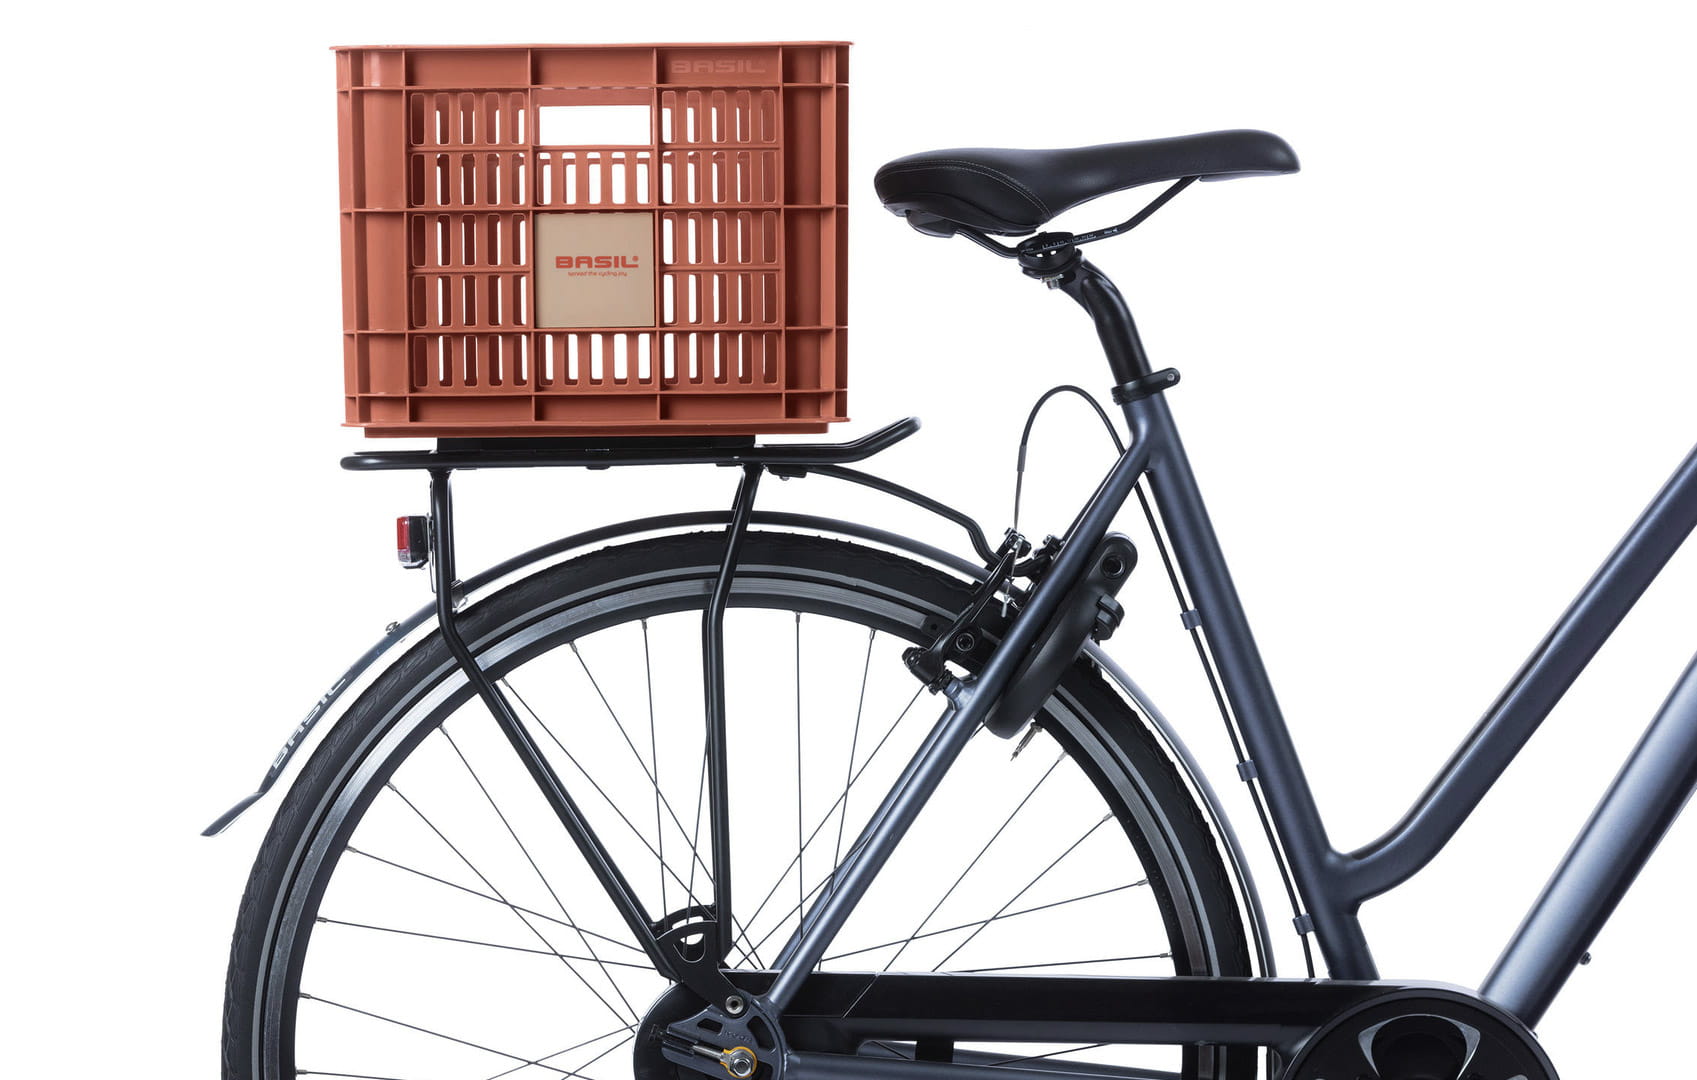 Basil Crate Fahrrad Transportkorb Fahrradkiste (abnehmbar)